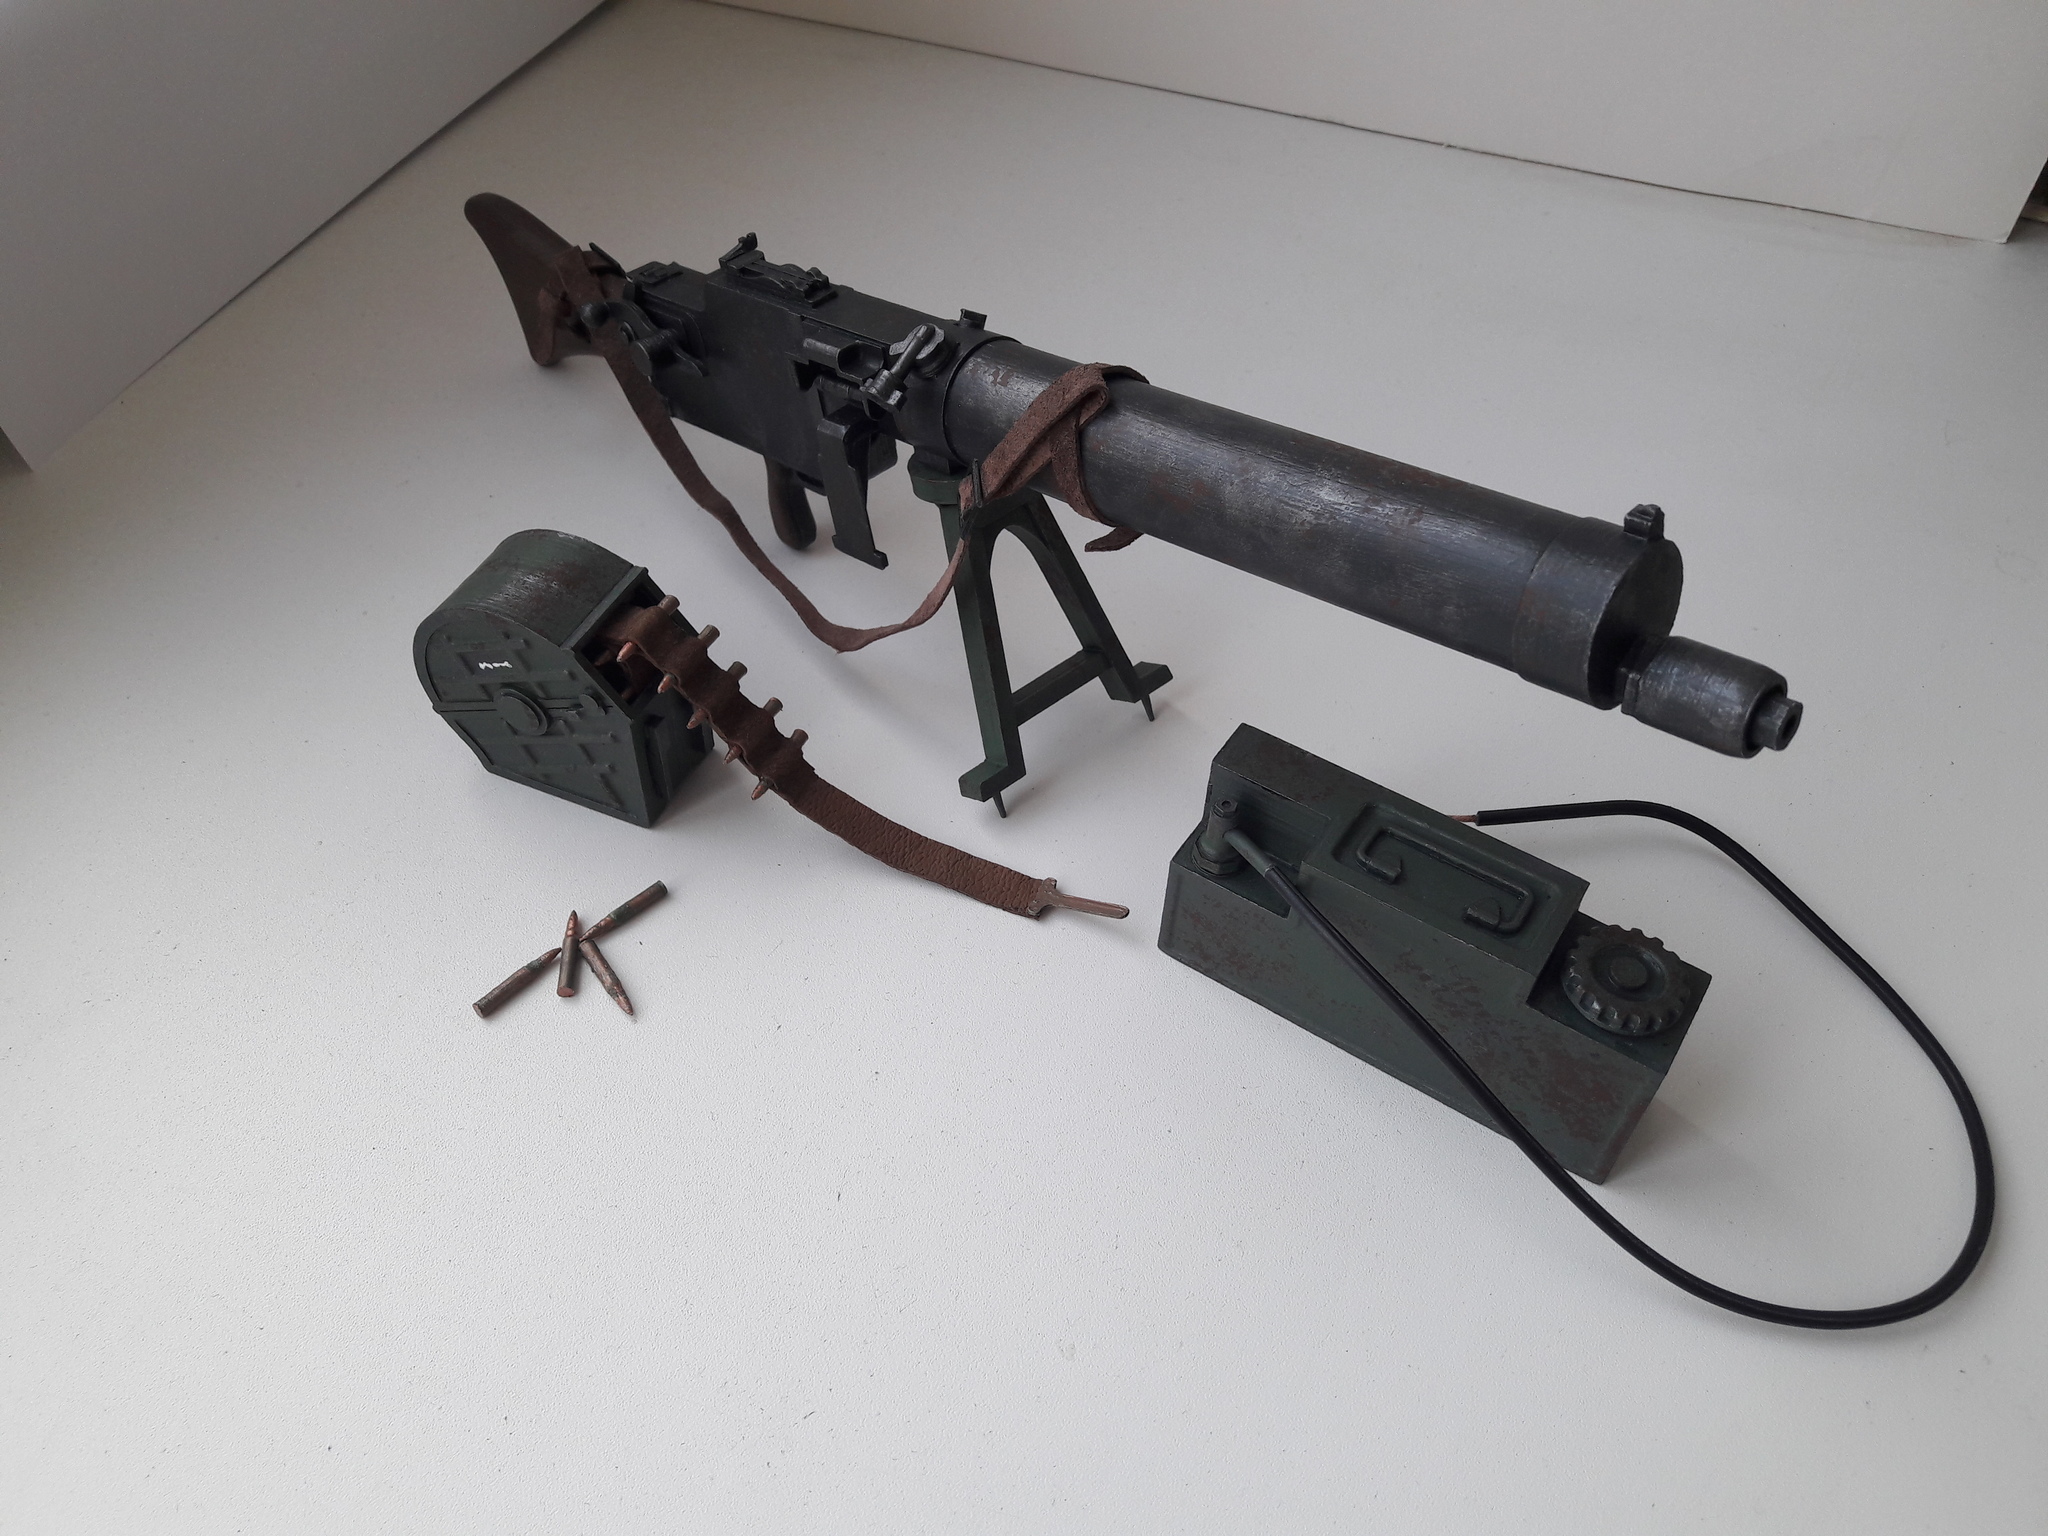 MG 08/15 maxim 2.0 (1:4) 3d printing and painting - My, Modeling, Prefabricated model, Stand modeling, World War I, Firearms, Machine gun, Maxim machine gun, 3D печать, Longpost